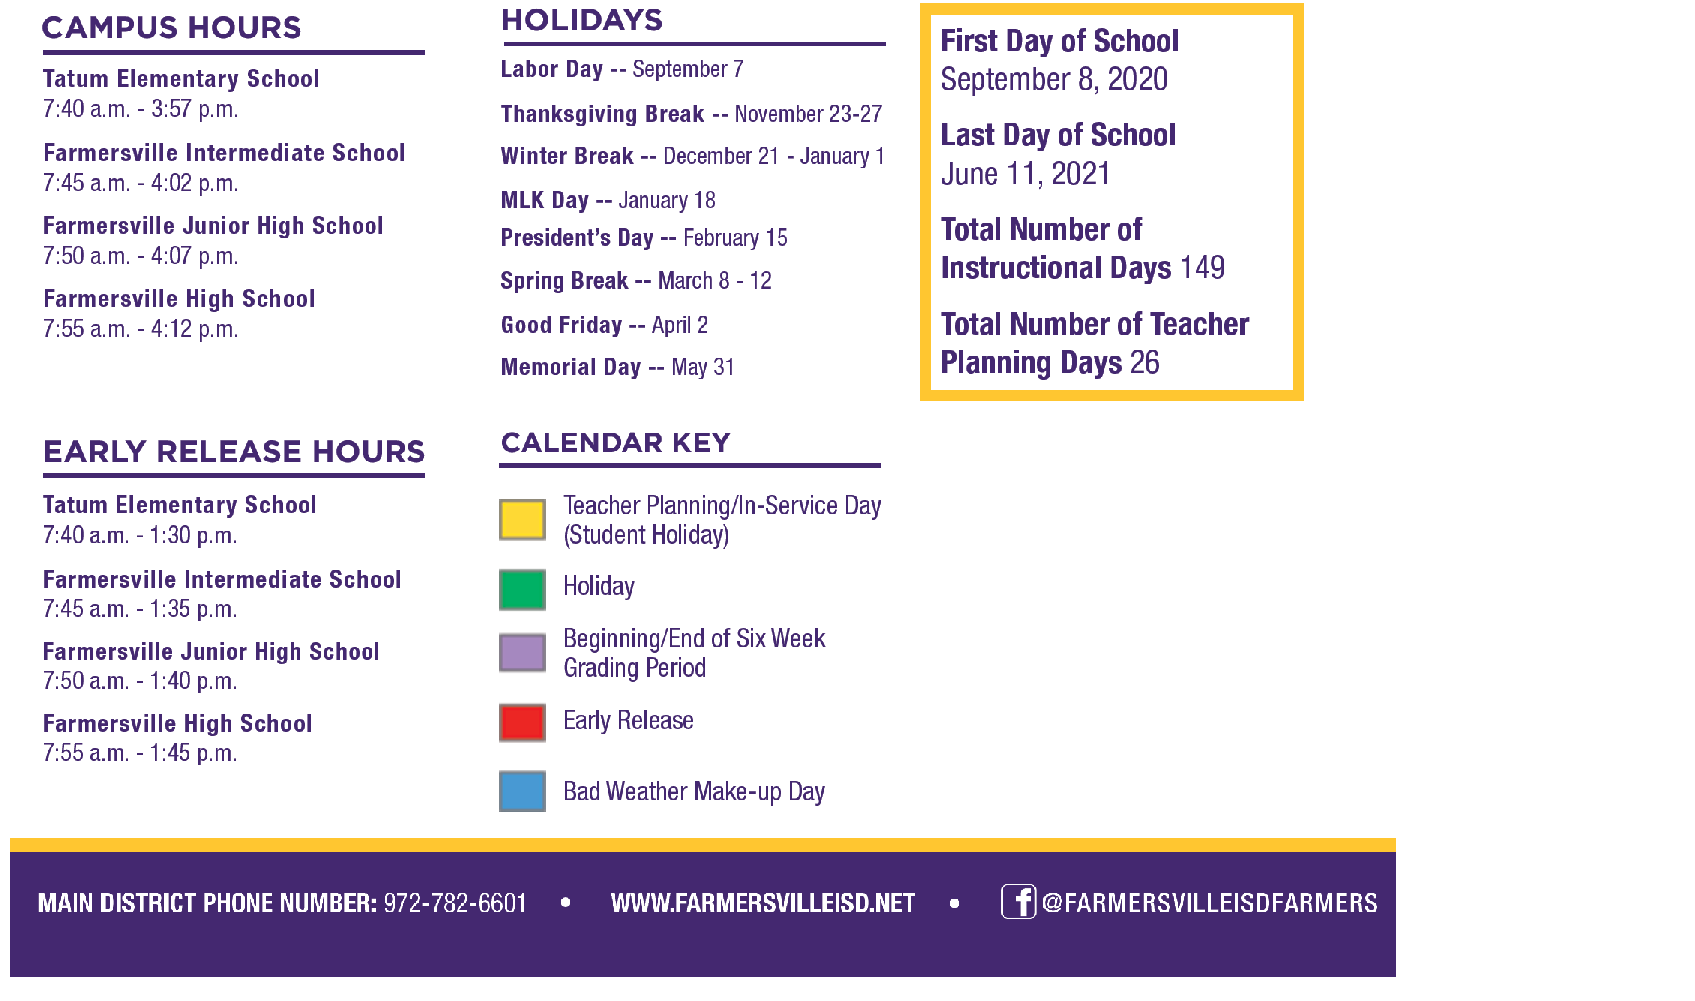 District School Academic Calendar Key for Tatum Elementary